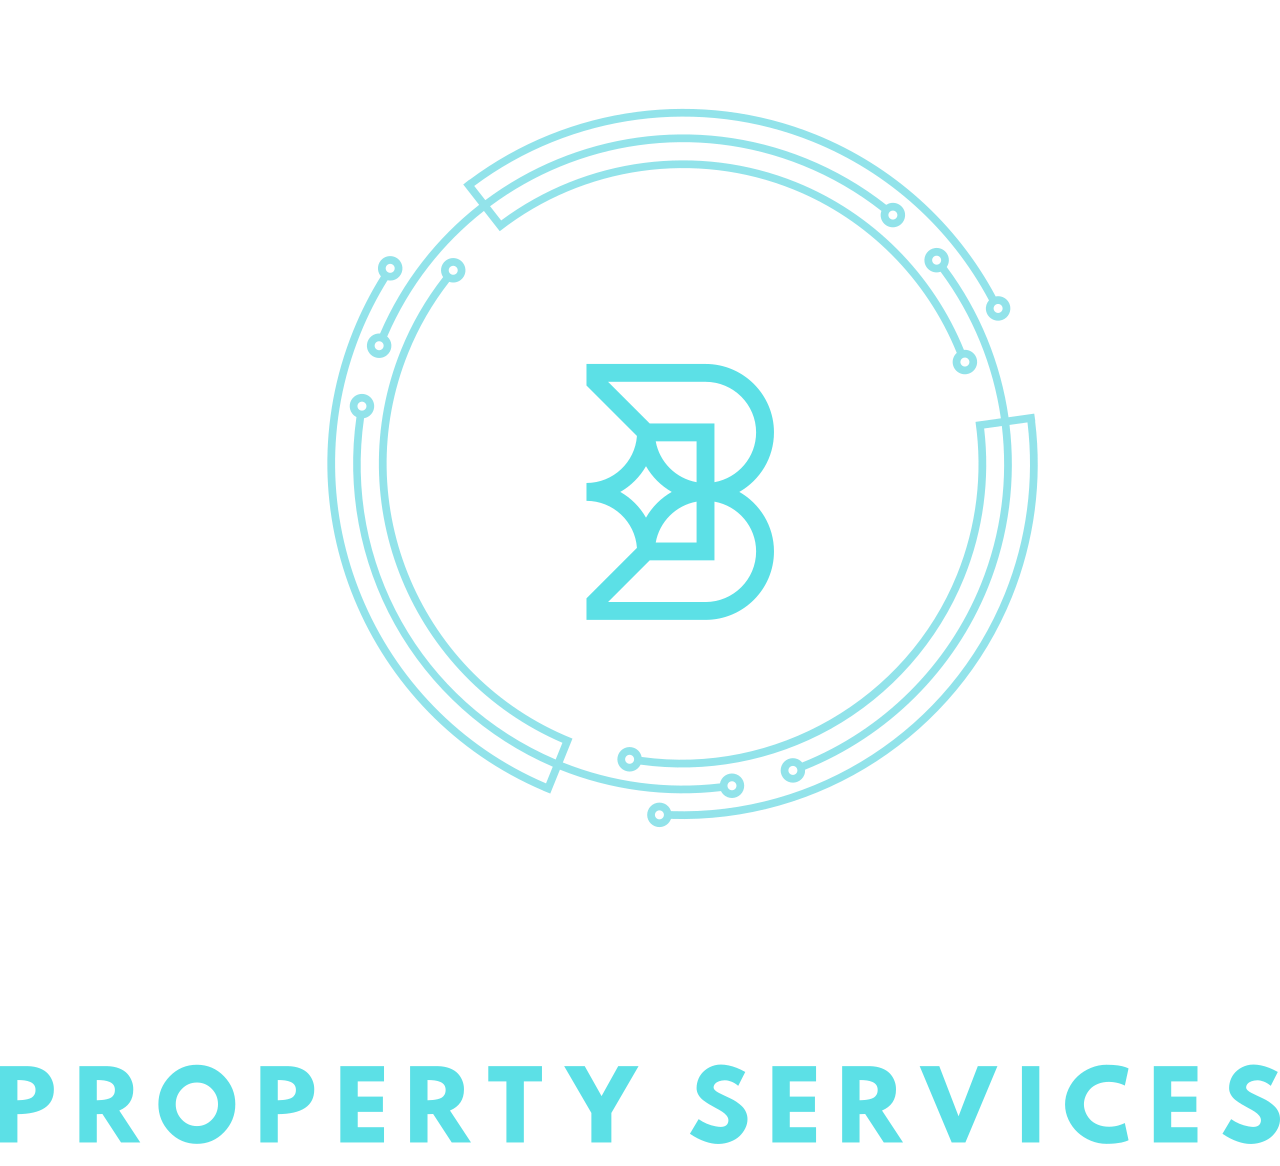 Briggs's logo